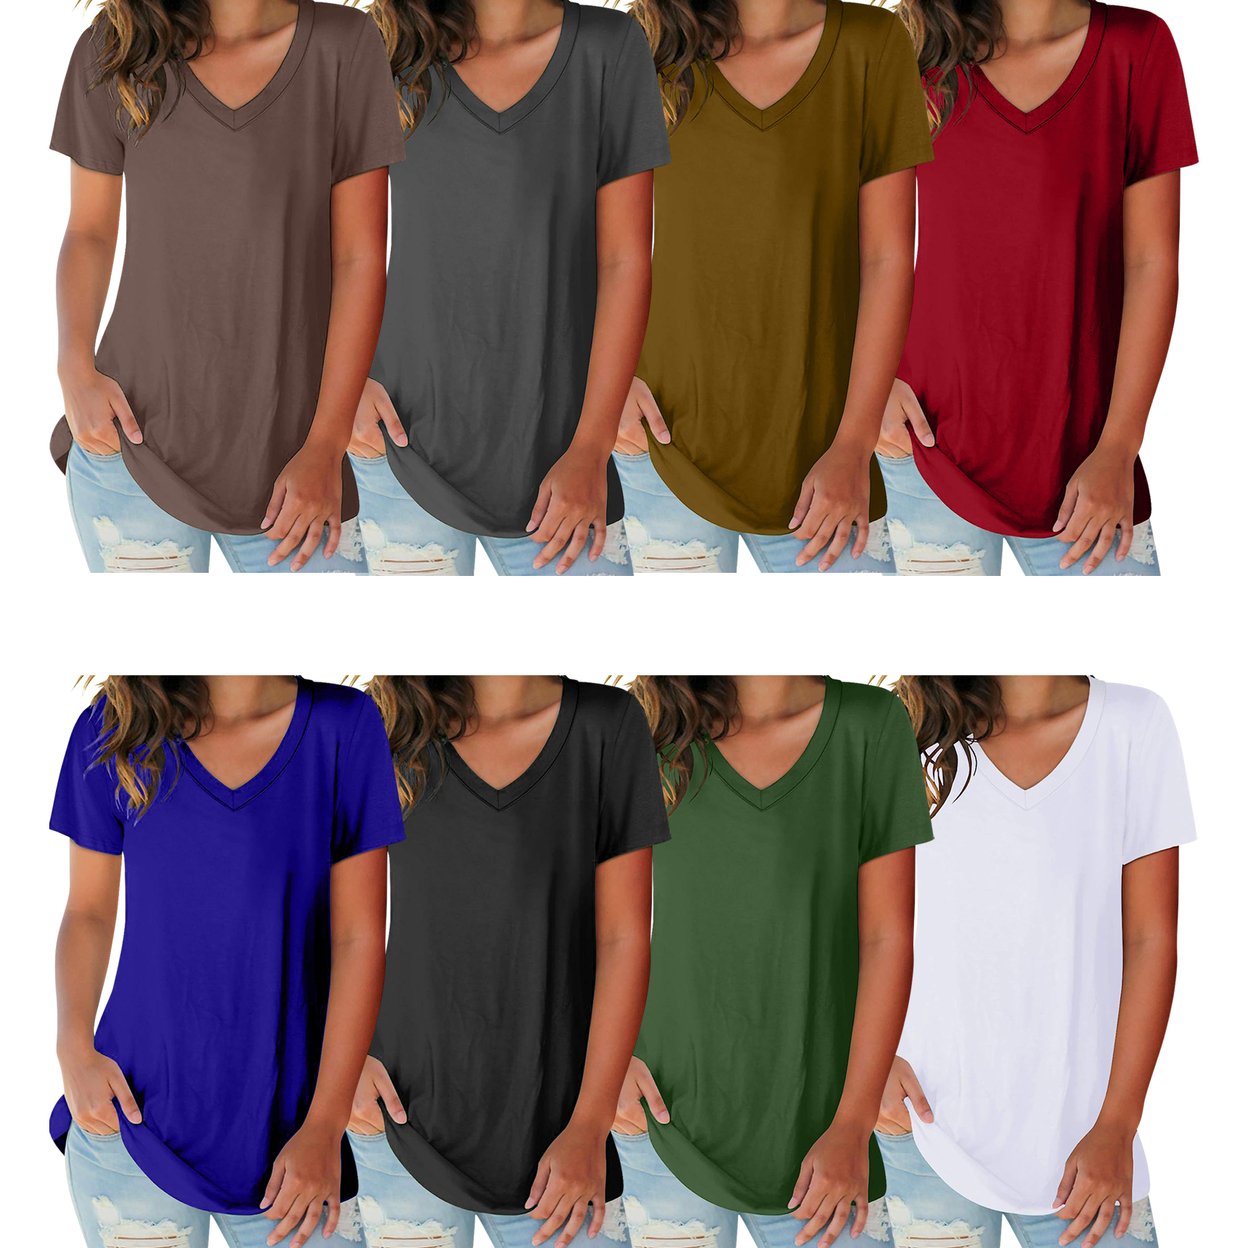 3-Pack: Women's Ultra Soft Smooth Cotton Blend Basic V-Neck Short Sleeve Shirts - Black, Navy, Grey, X-large